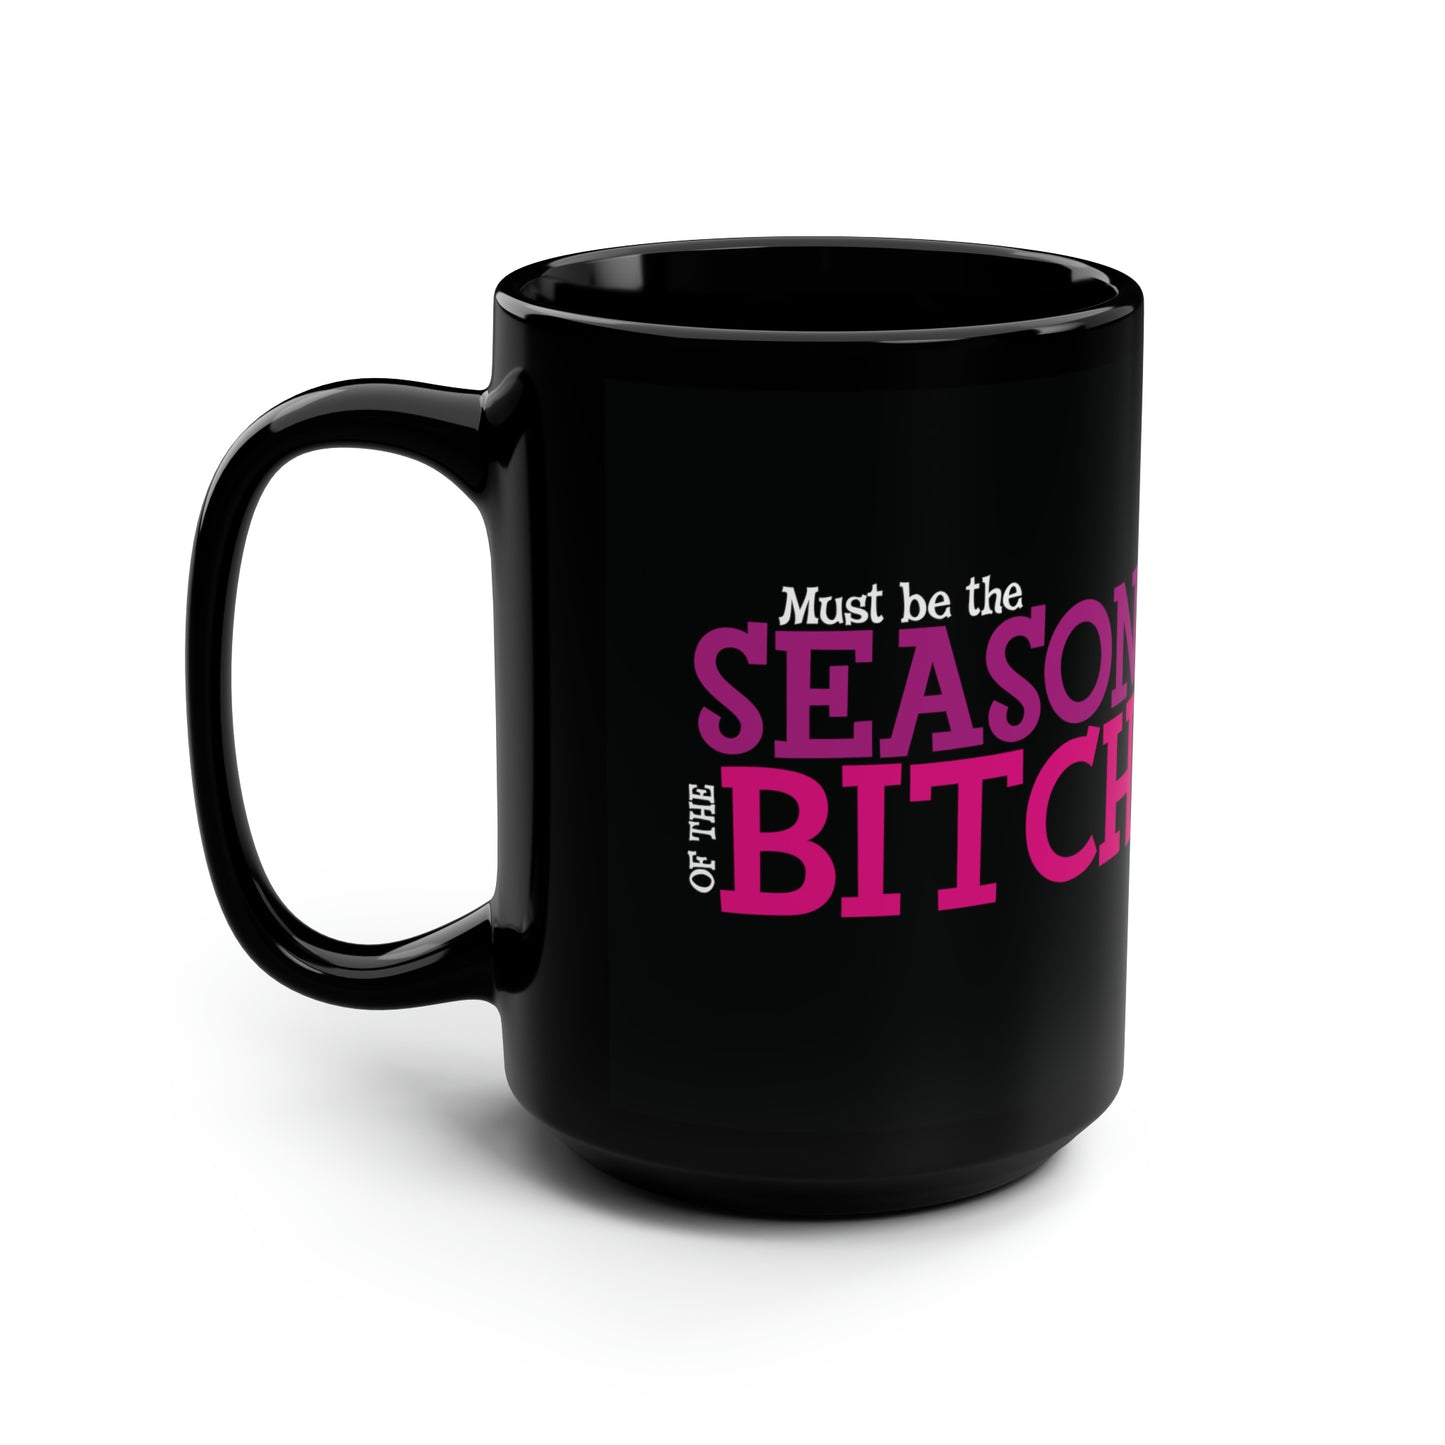 Must be the Season of the Bitch Mug 15oz Black